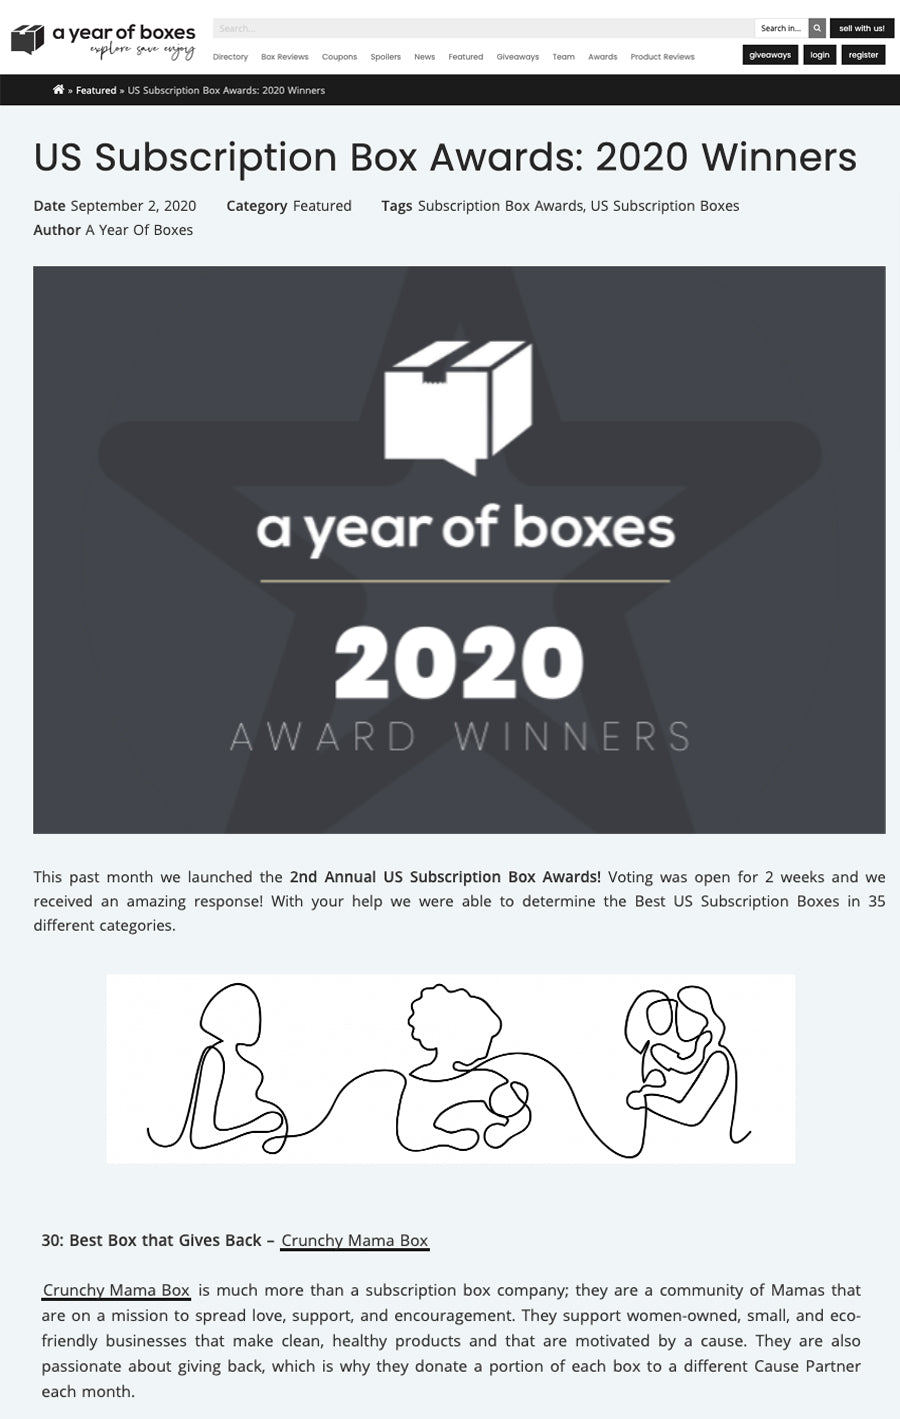 US Subscription Box Awards 2020